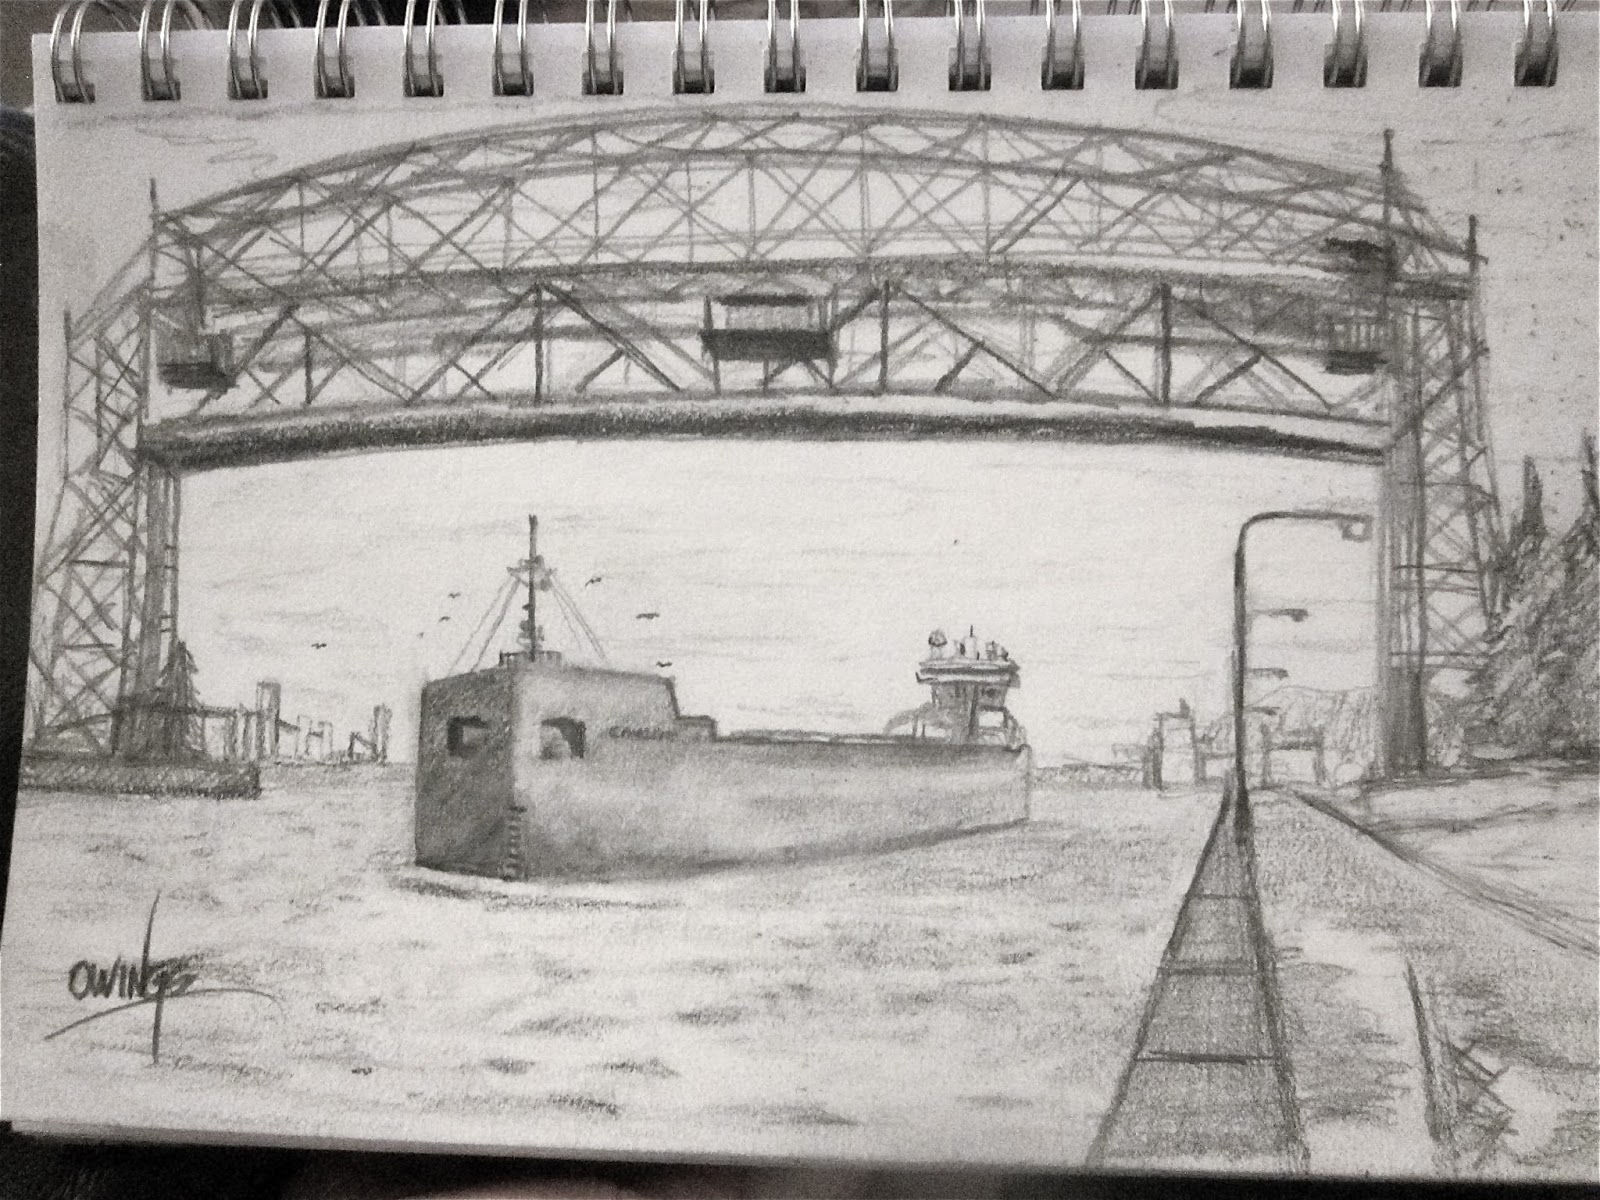 Duluth Lift Bridge Drawing